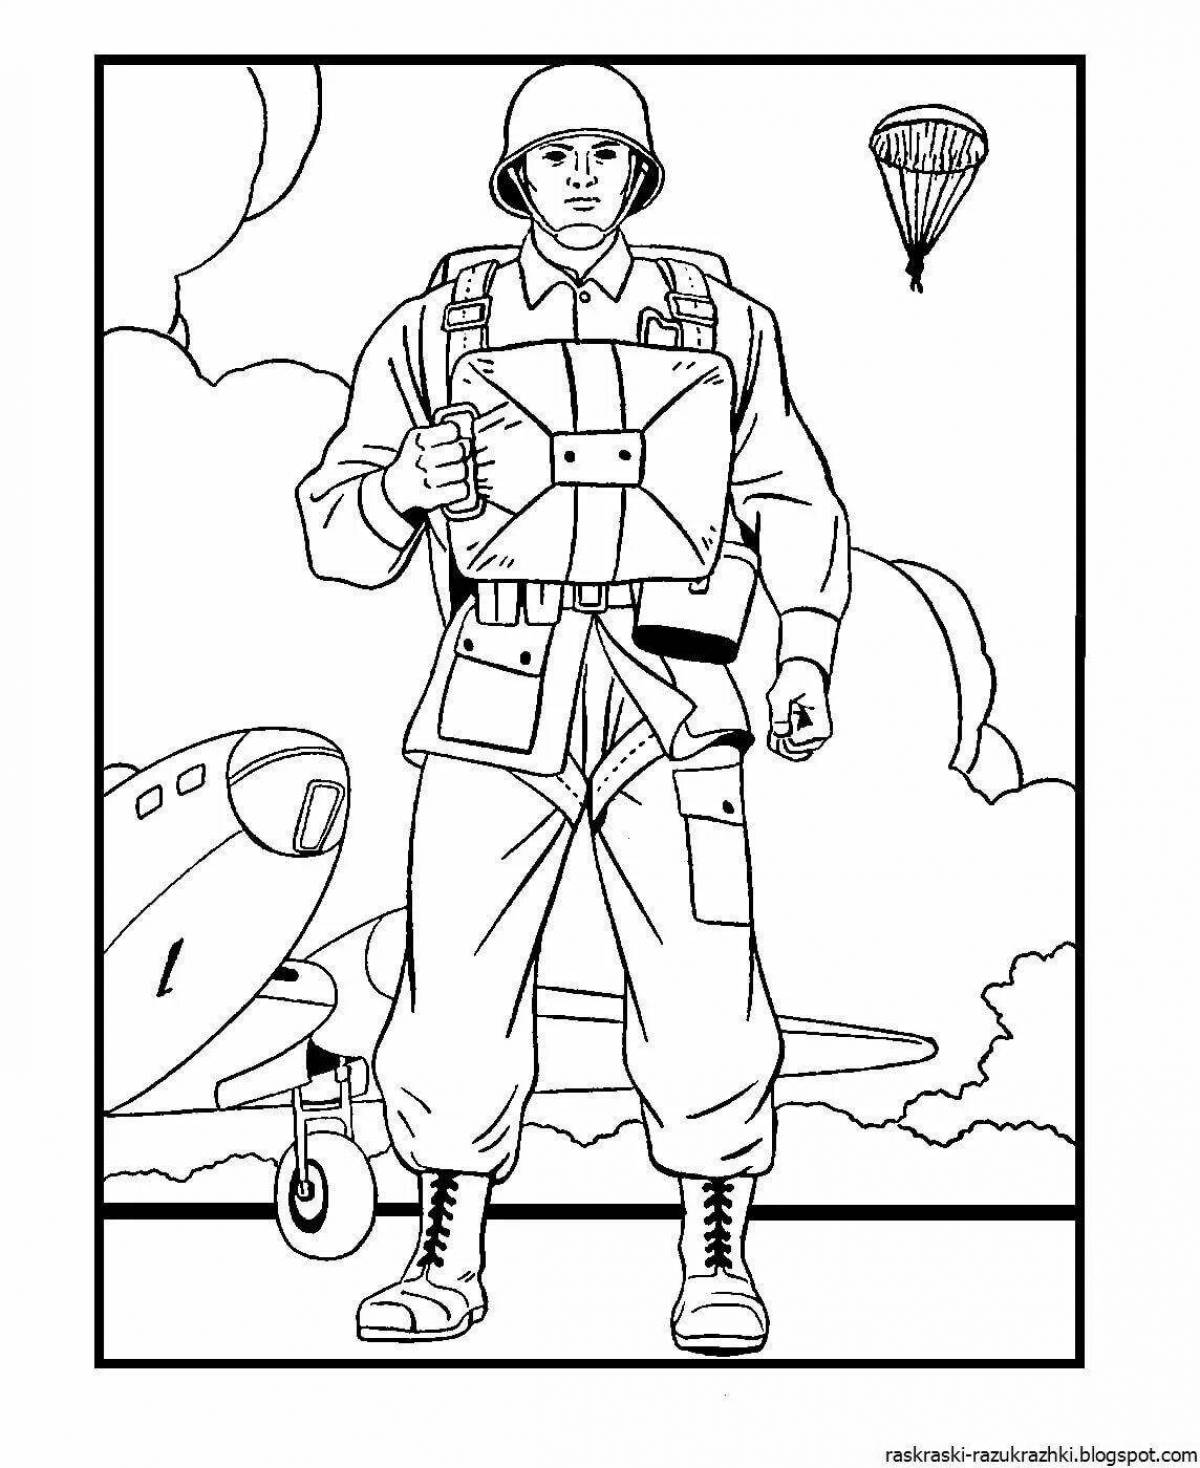 Impressive coloring book boy in military uniform